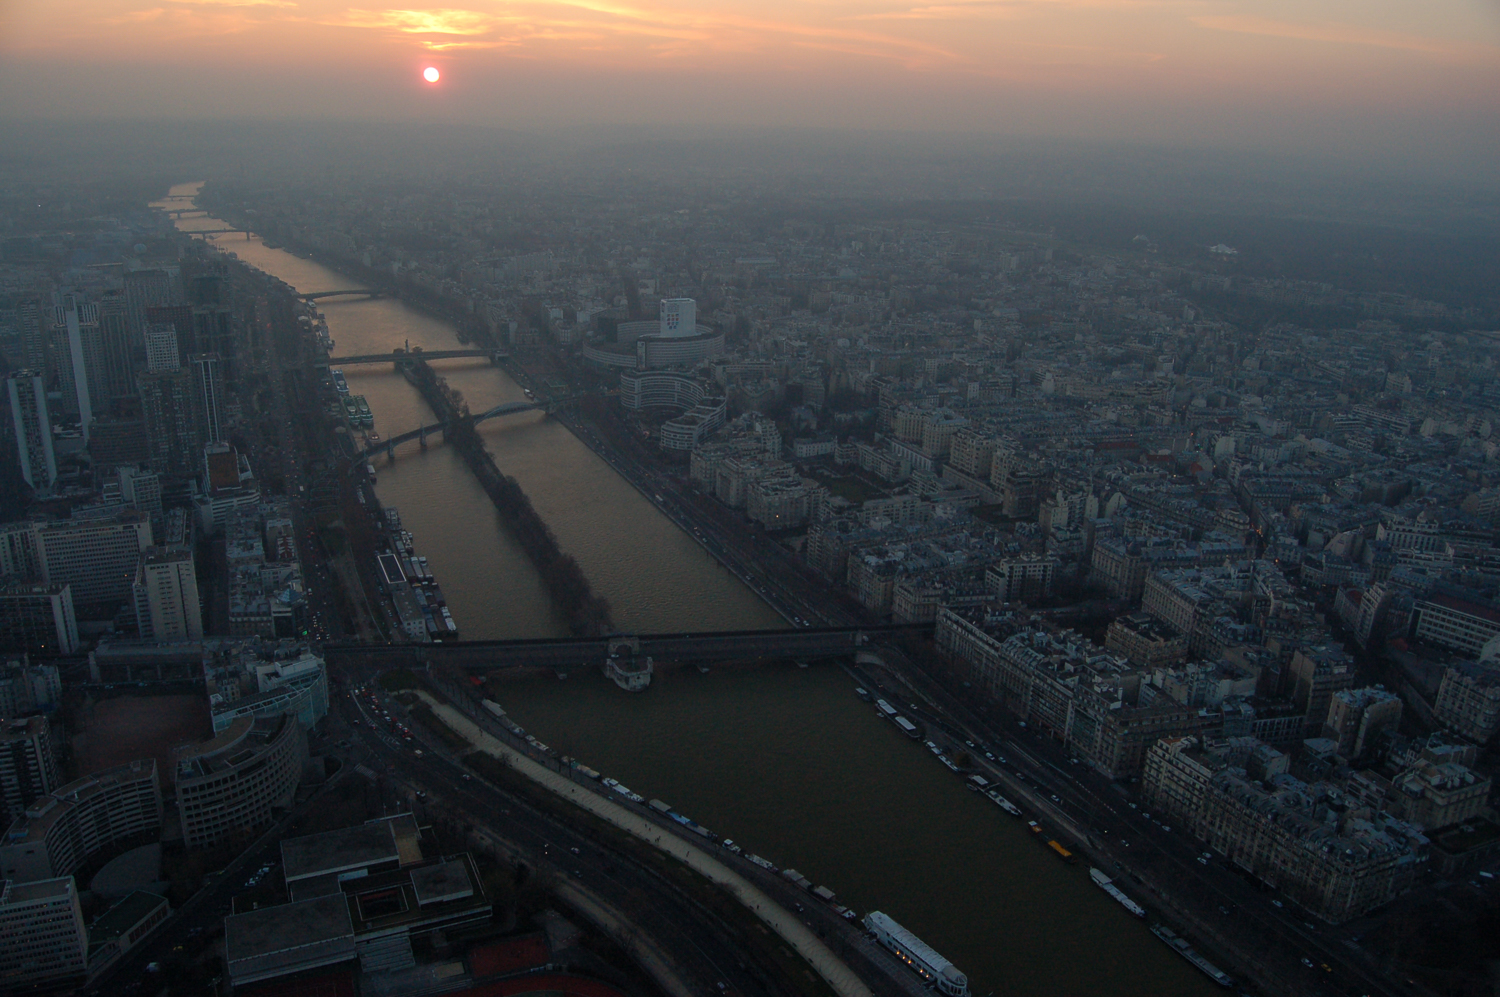 Sunset, Paris